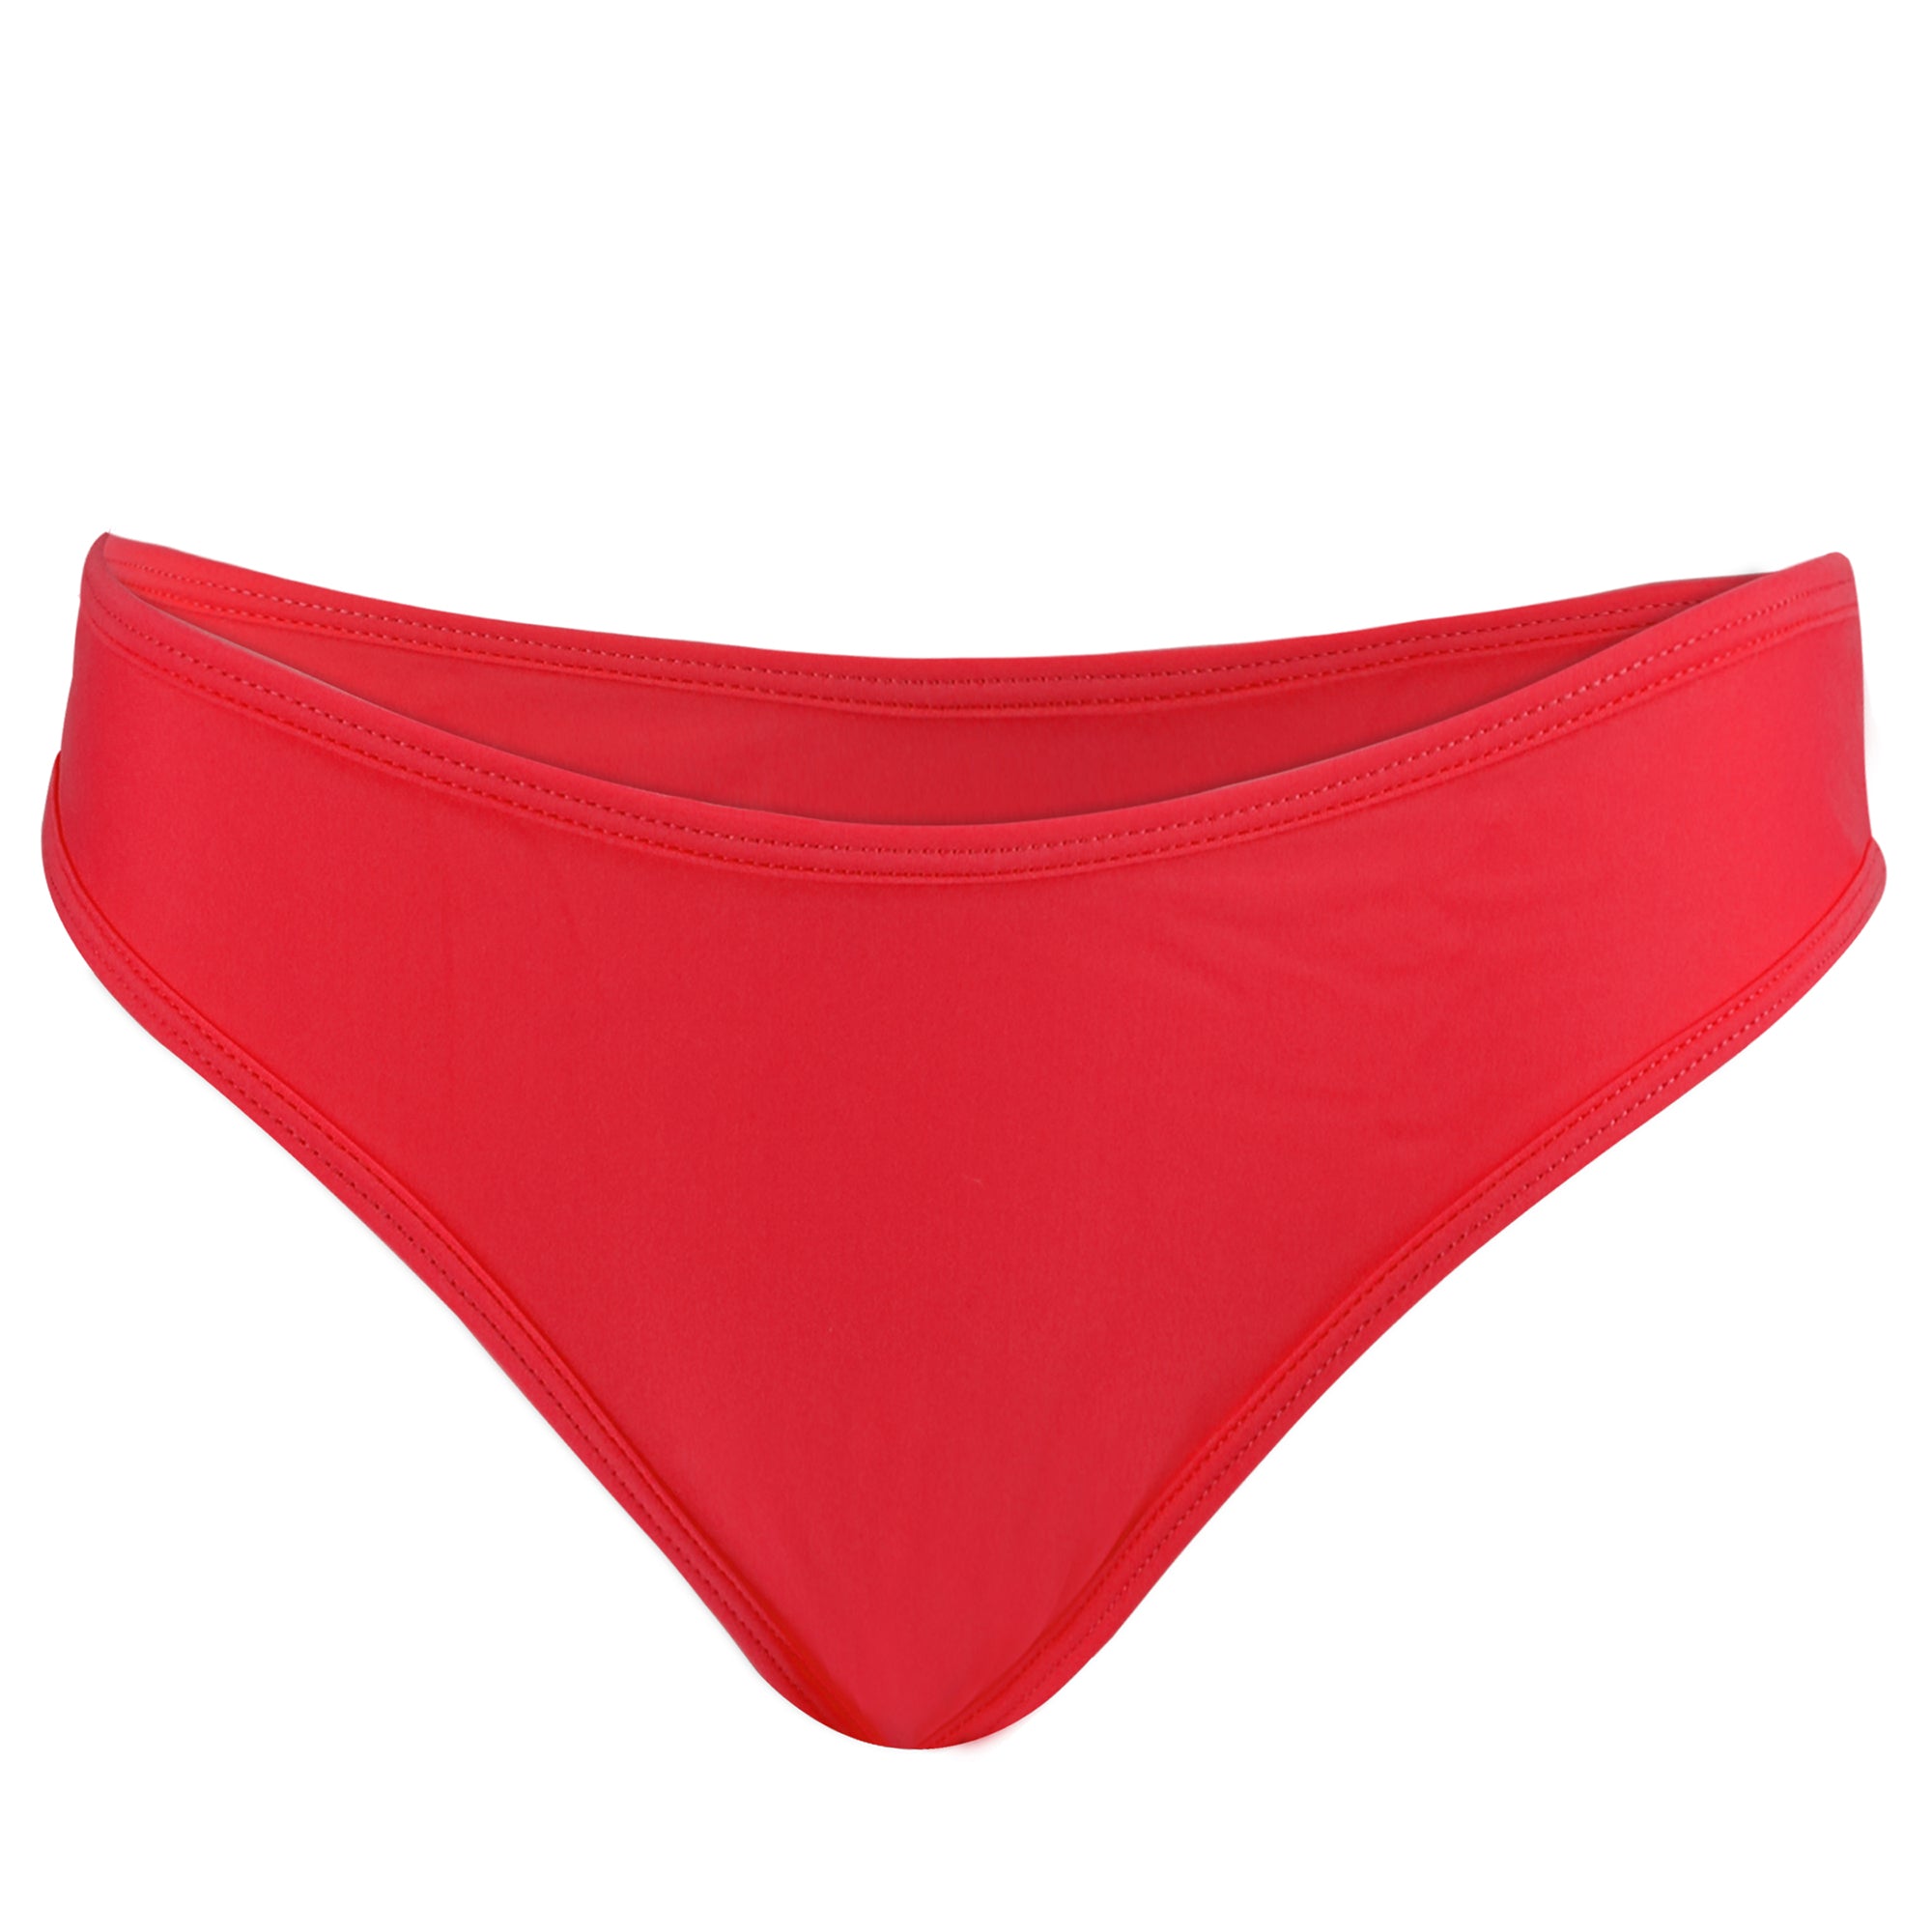 Venice Beach Bottoms x Sunset Red - Siesta Key Bikinis 